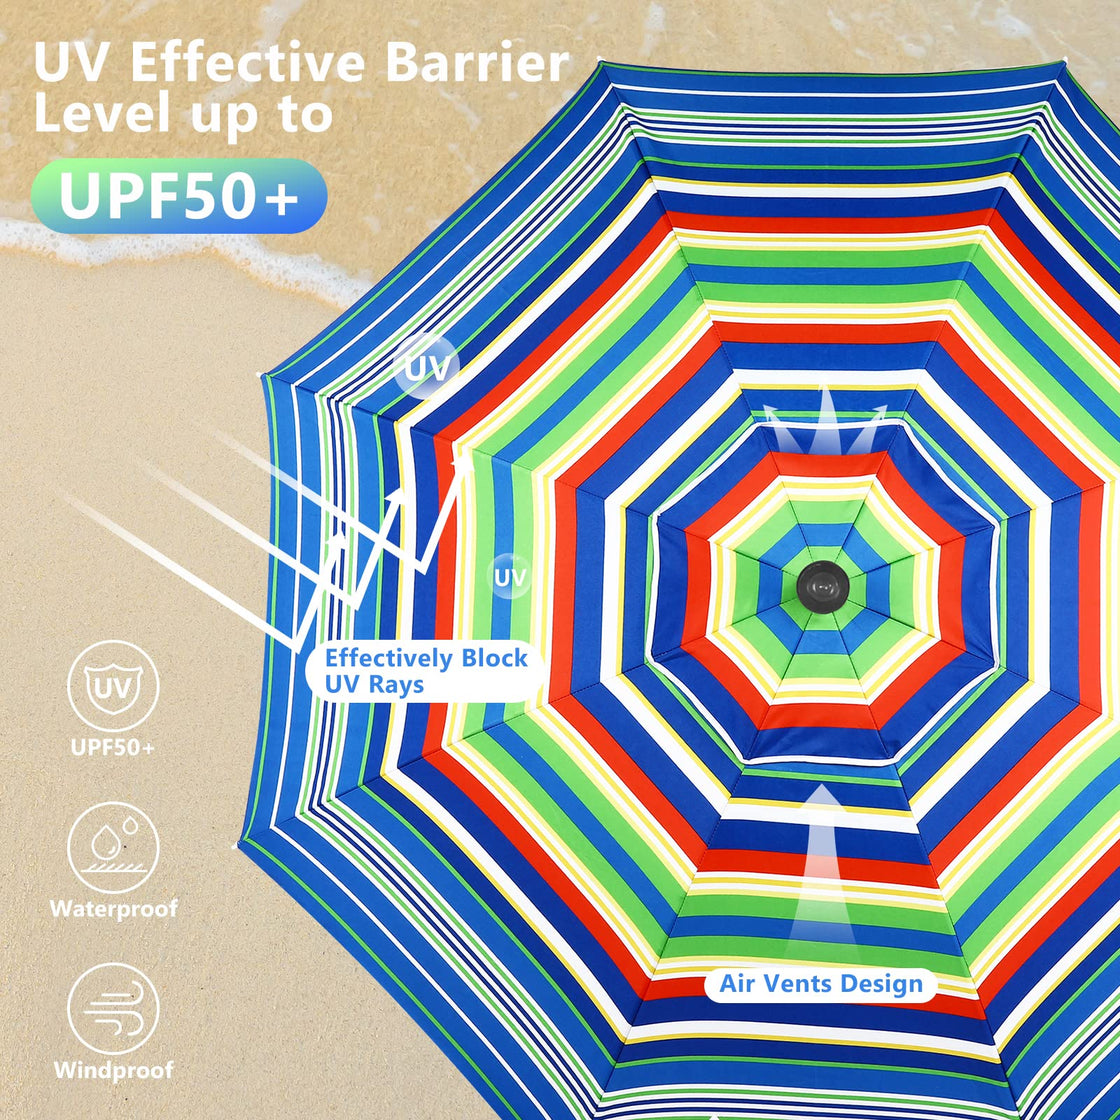 7.5ft Beach Umbrella (BlueRed Stripe Stripe,7.5ft)